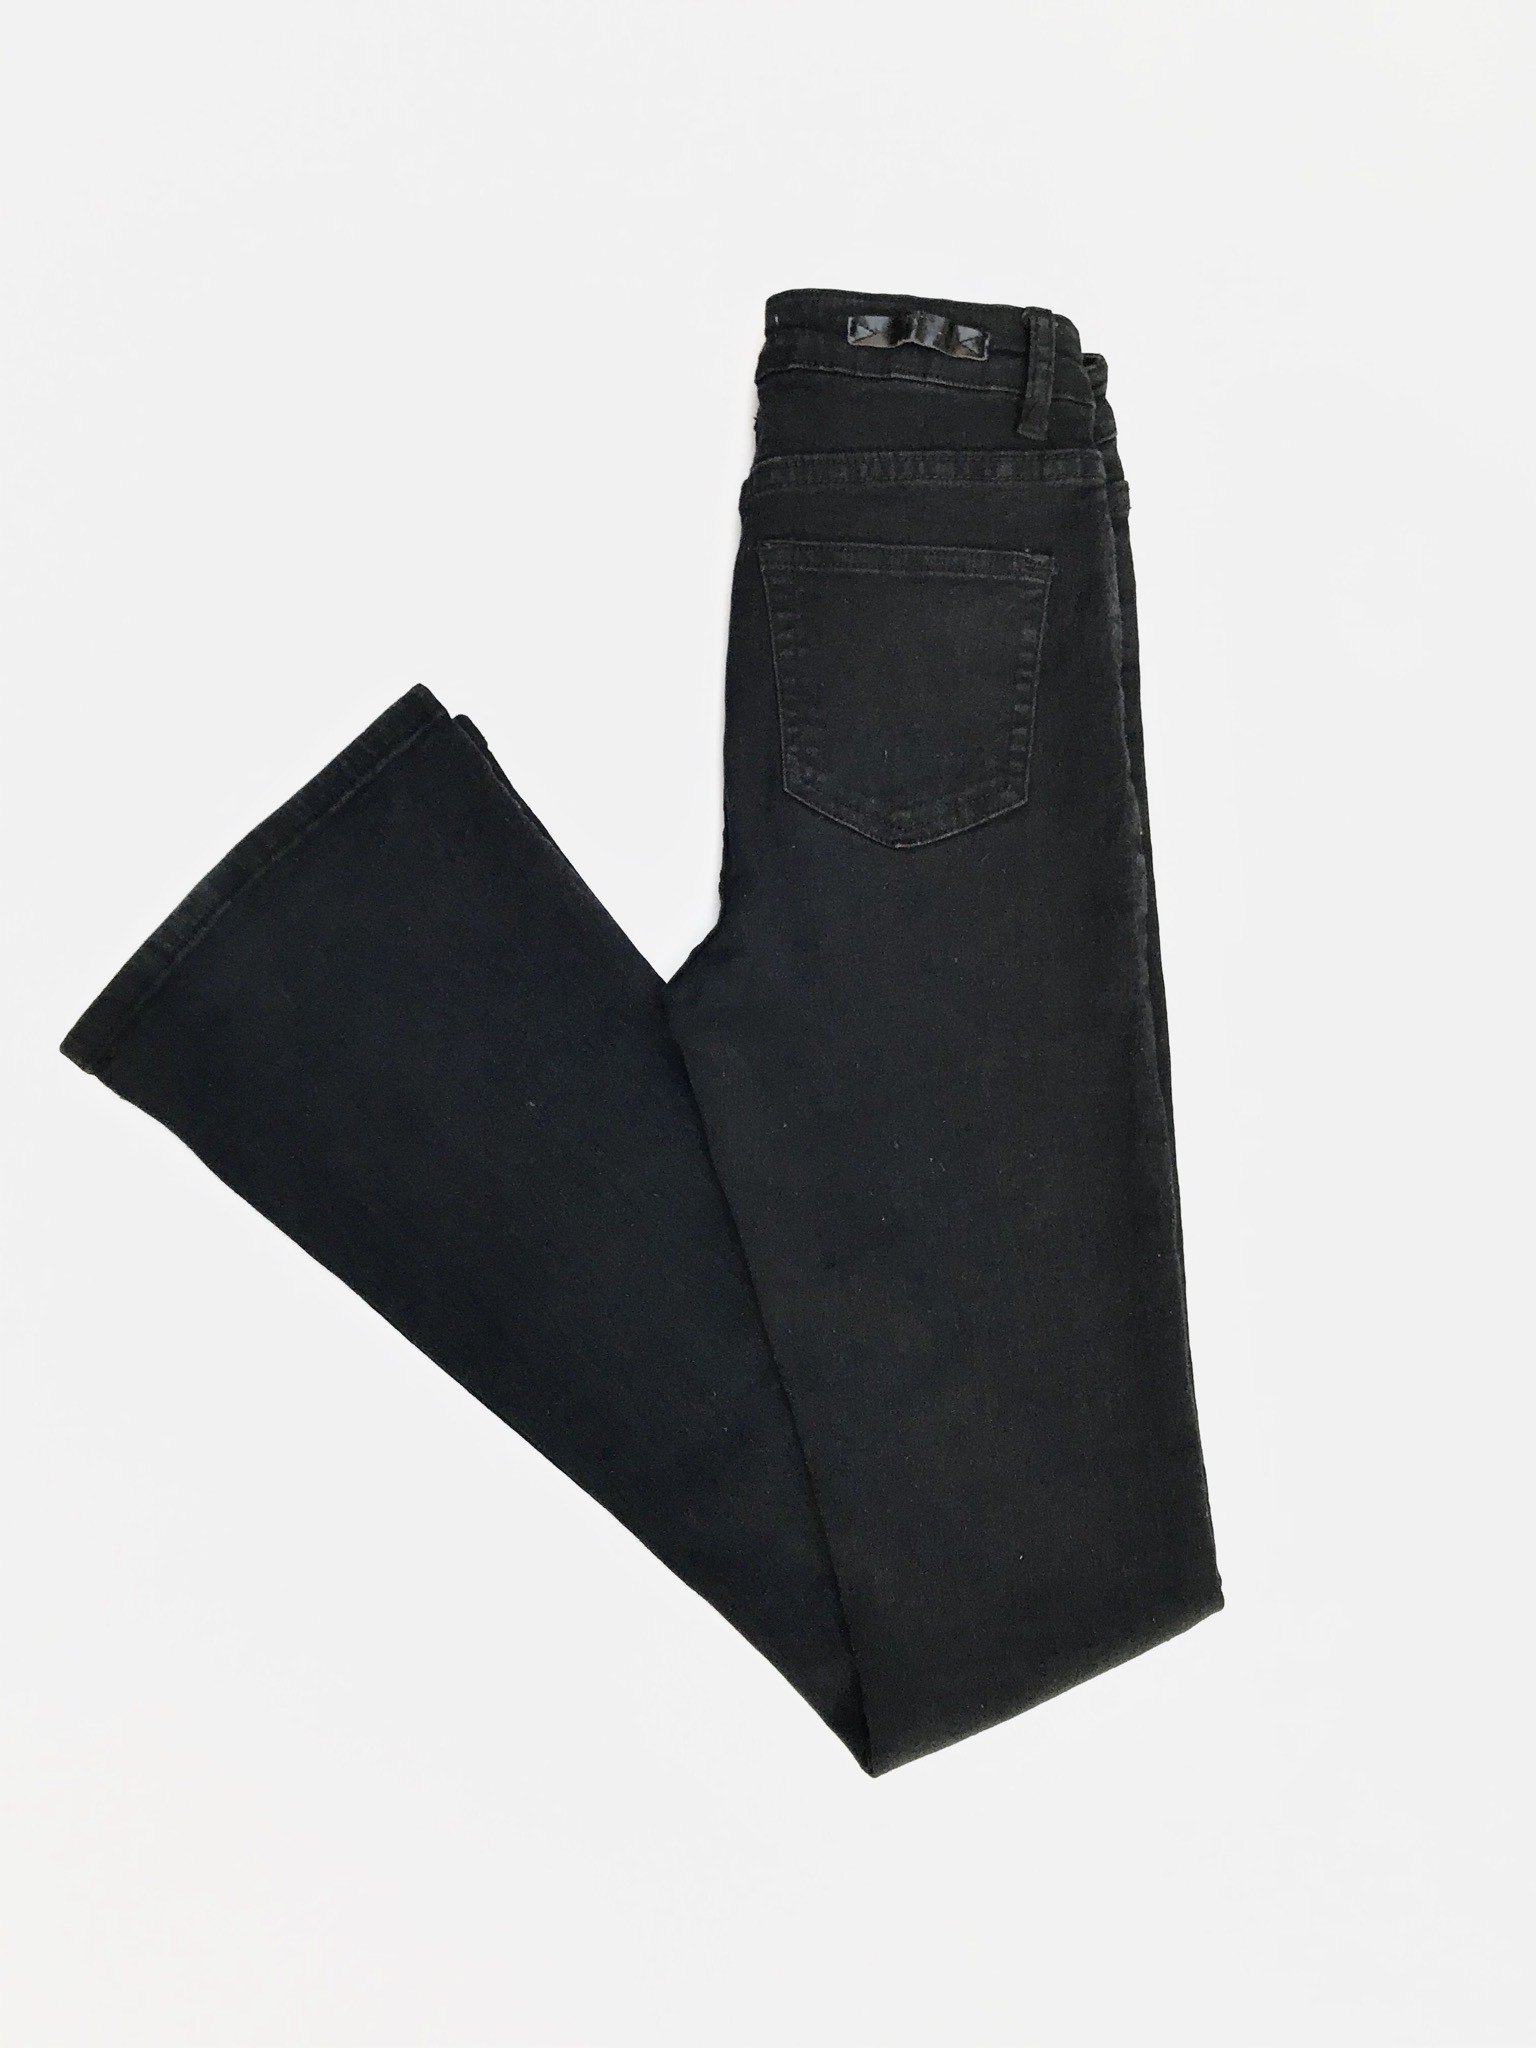 Pantalón Index a la cintura, de denim negro stretch 75% algodón, 5 bolsillos, pitillo con basta campana
Talla 26